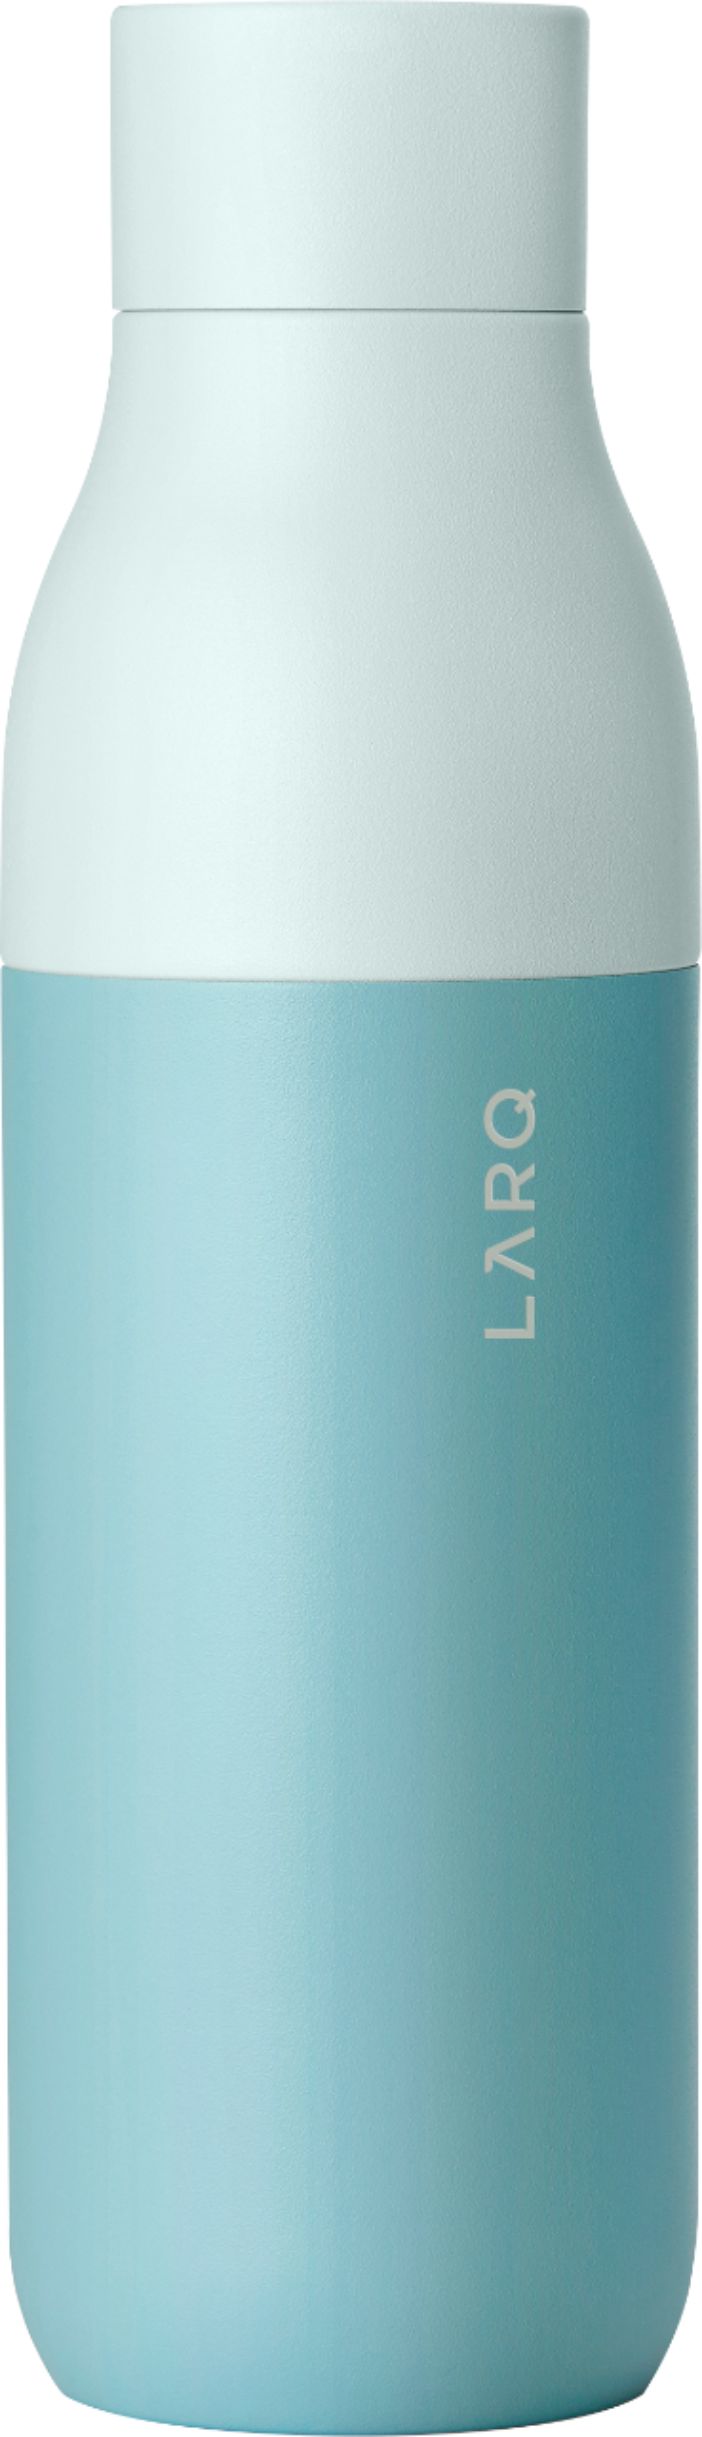 Angle View: LARQ - 25 oz. Water Purification Thermal Bottle - Seaside Mint